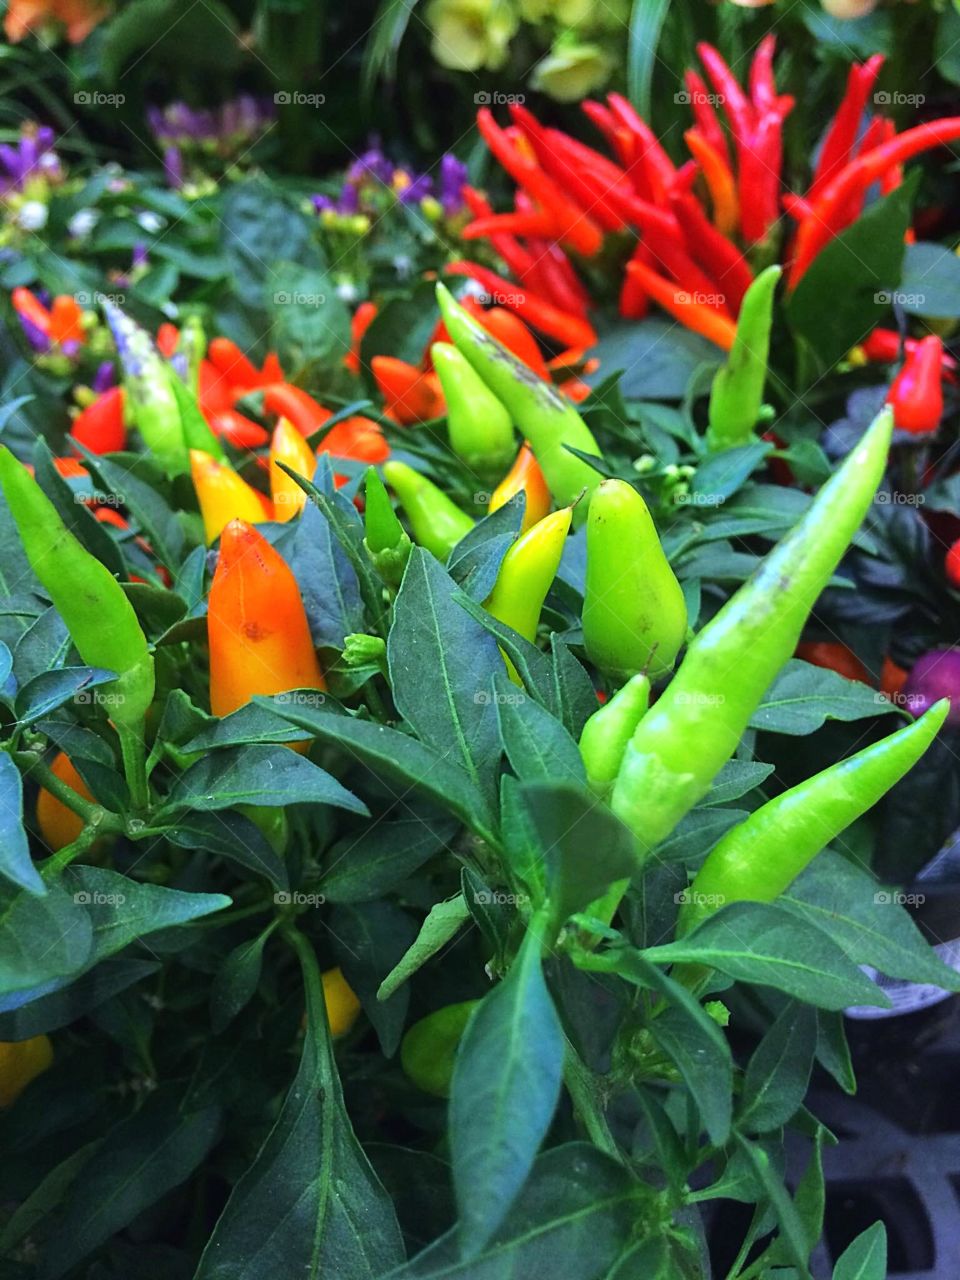 Ornamental peppers 
